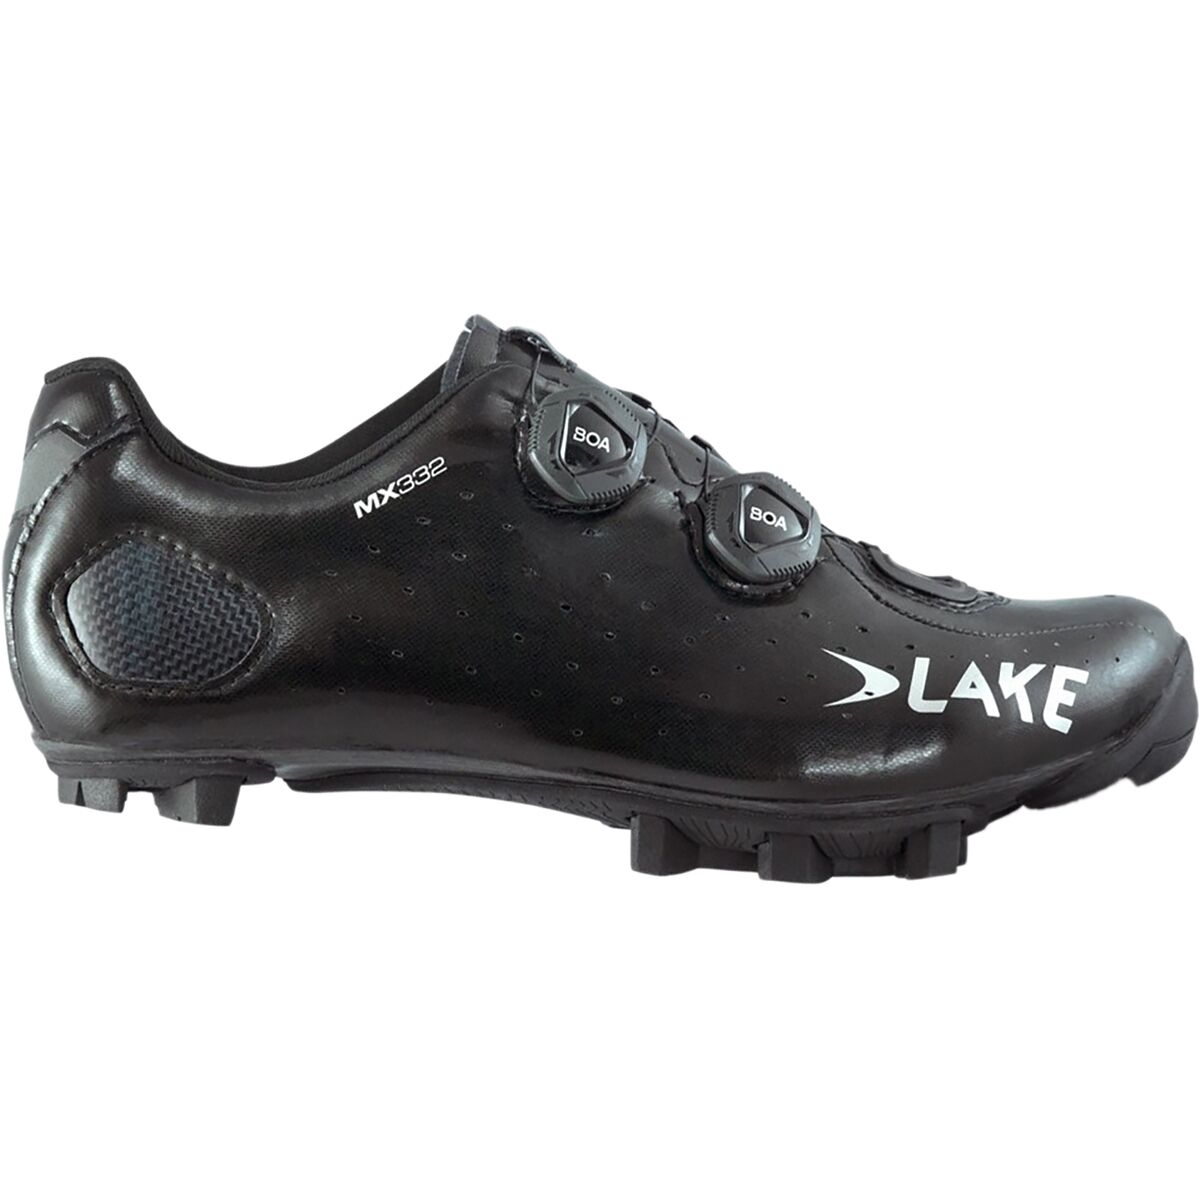 Lake MX332 Wide Clarino Mountain Bike Shoe - Men's